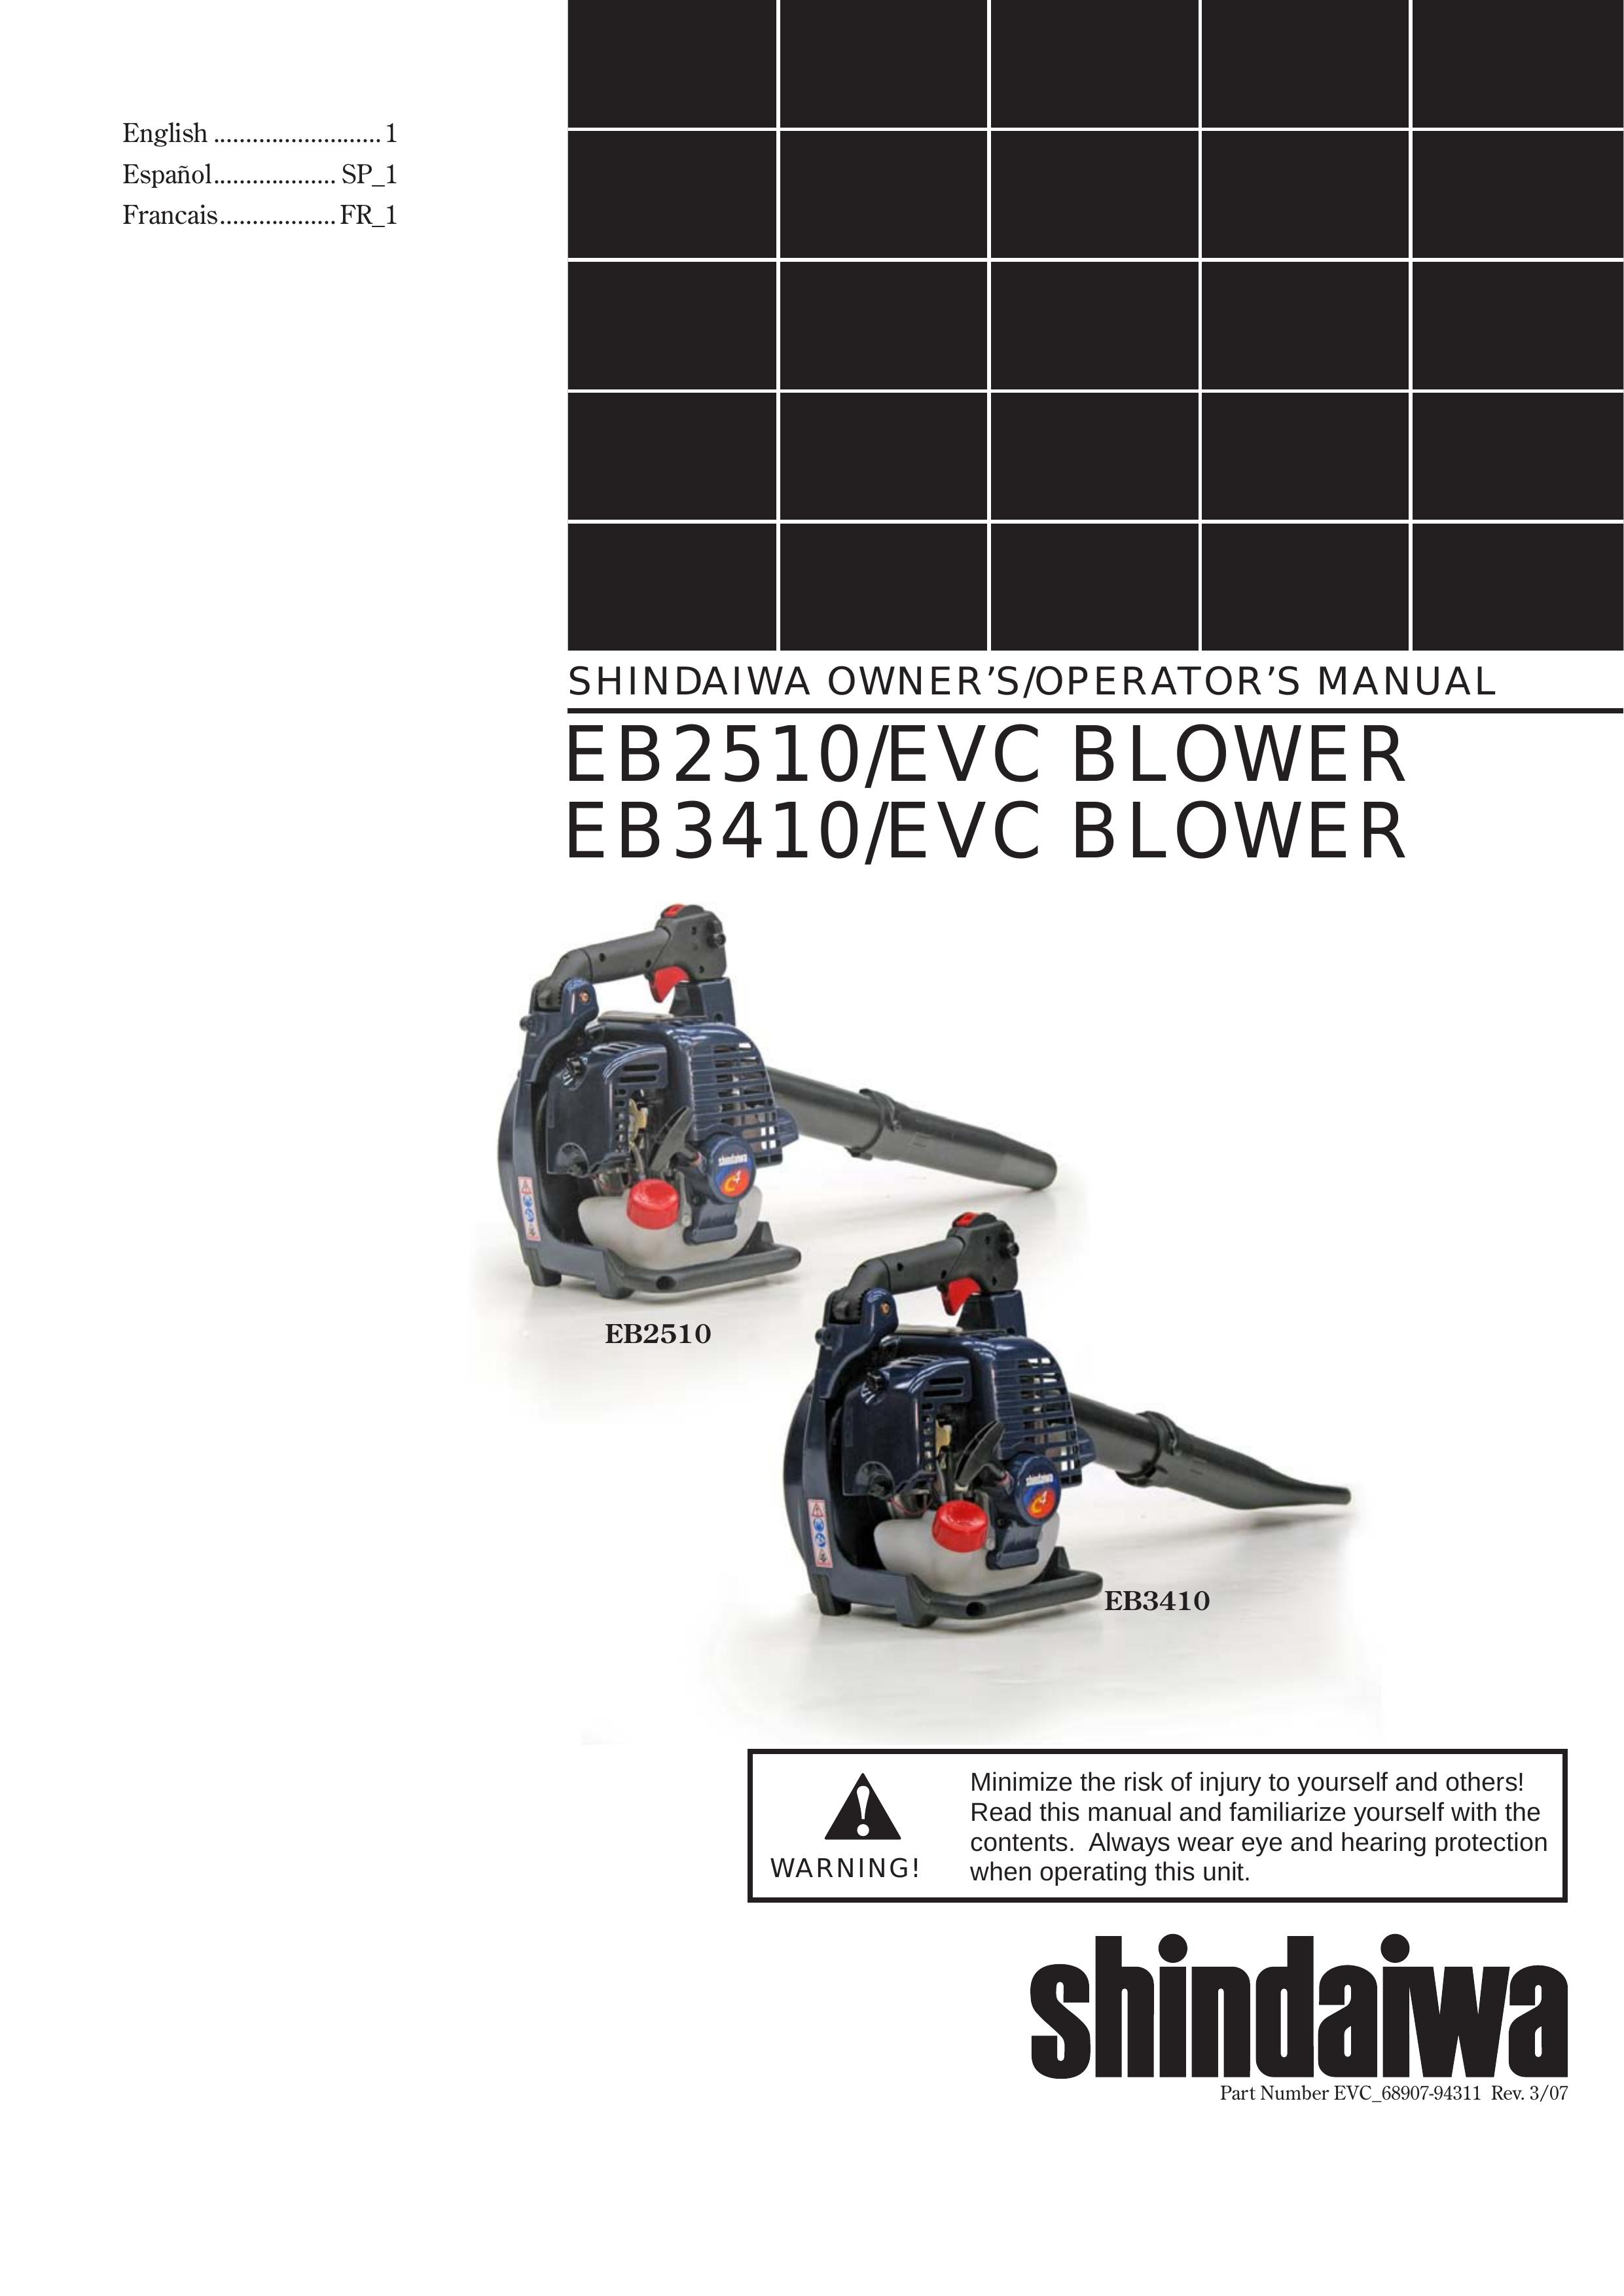 Shindaiwa EB2510/EVC Blower User Manual